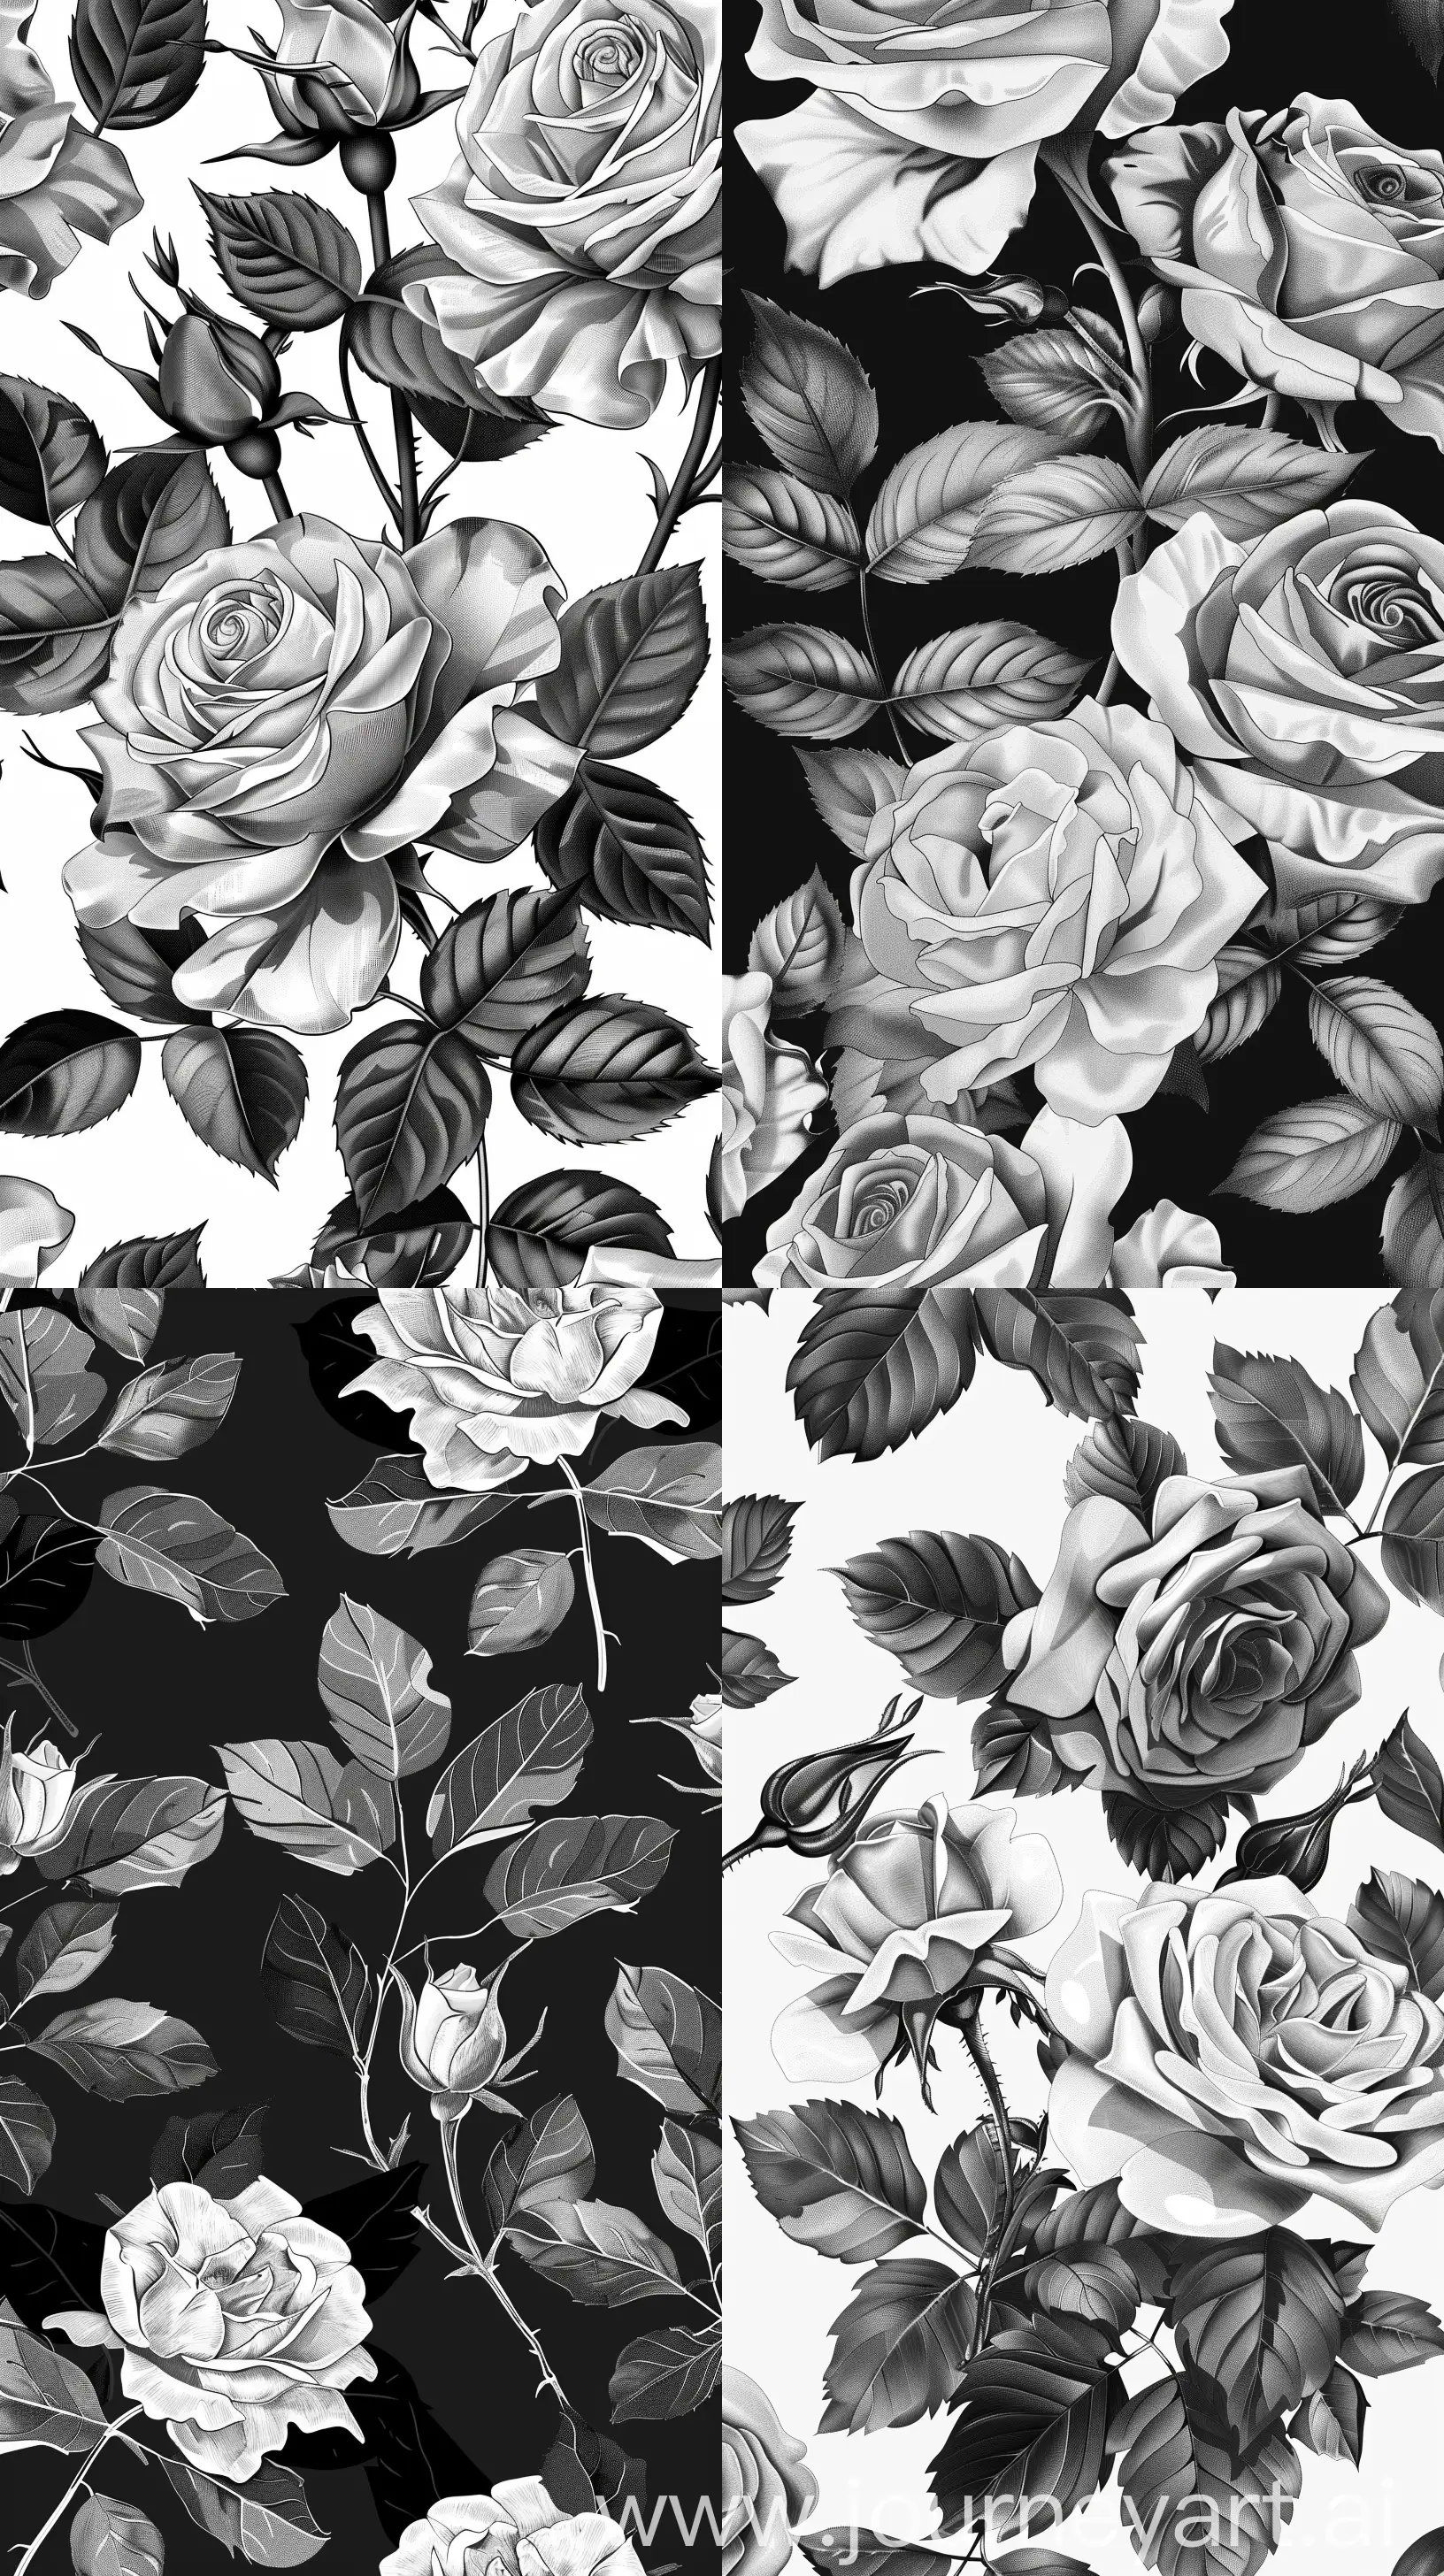 Geometric-Rose-Flower-Pattern-Illustration-in-Black-and-White-Vector